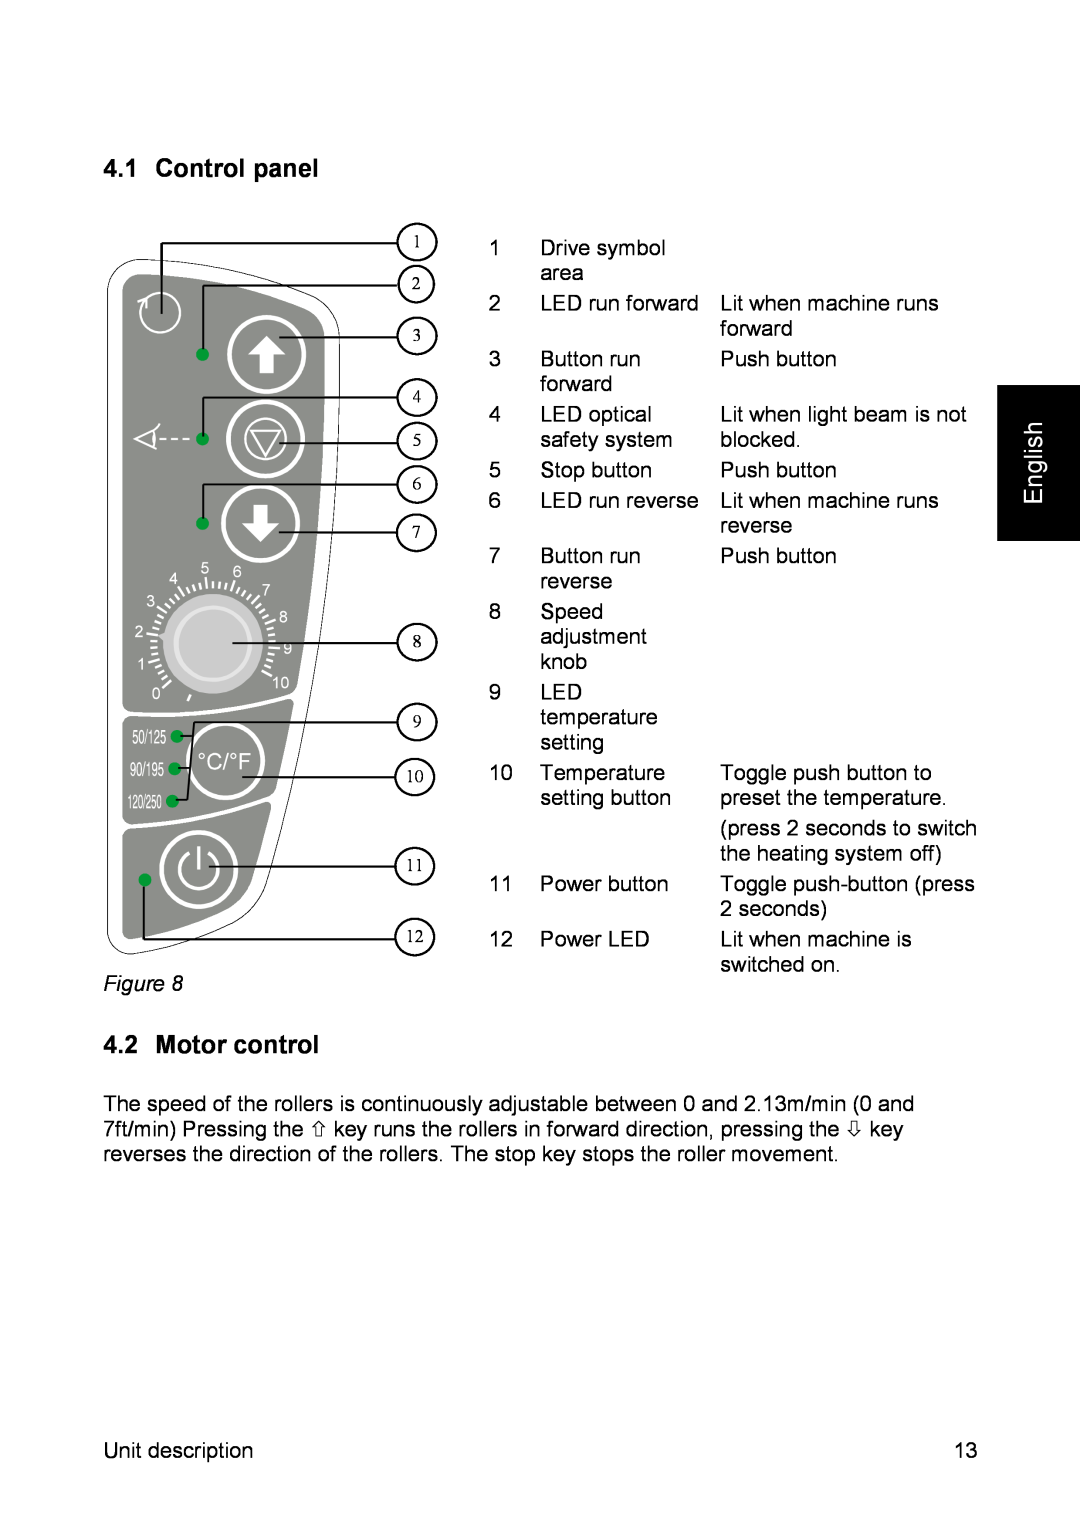 SEAL 44/62 user manual Control panel, Motor control, English 